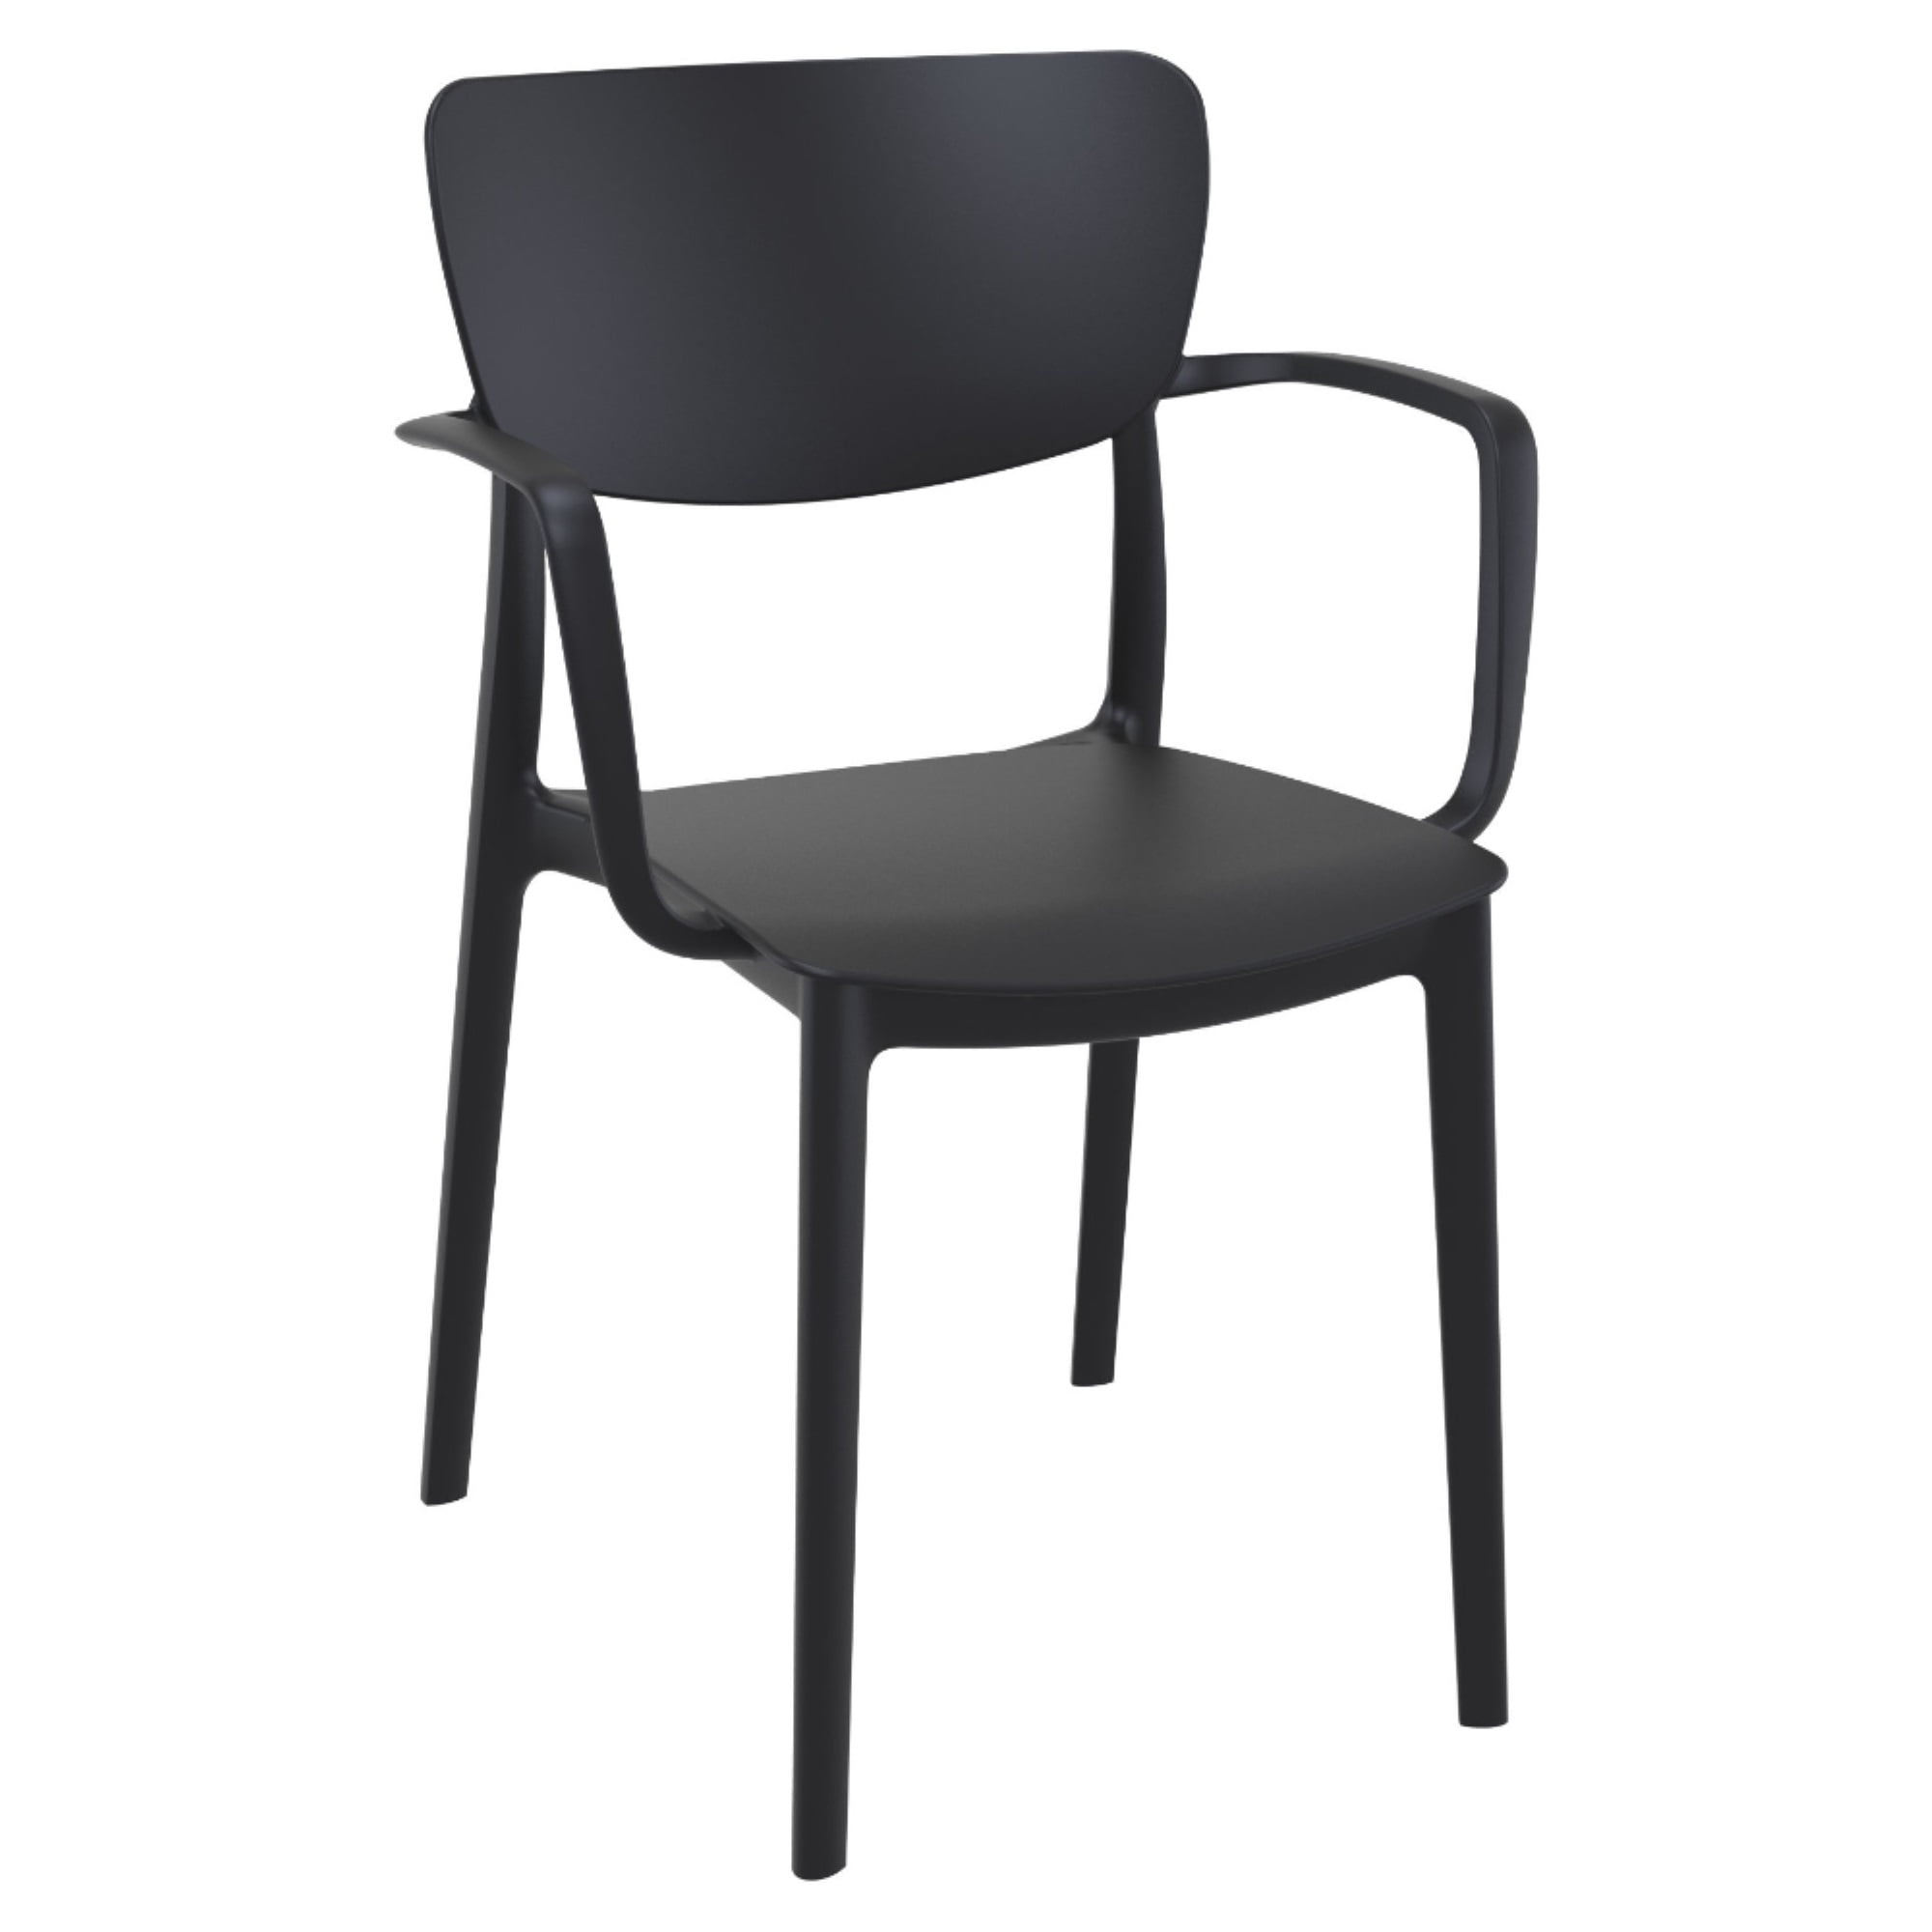 Isp126-bla Lisa Outdoor Dining Arm Chair - Black